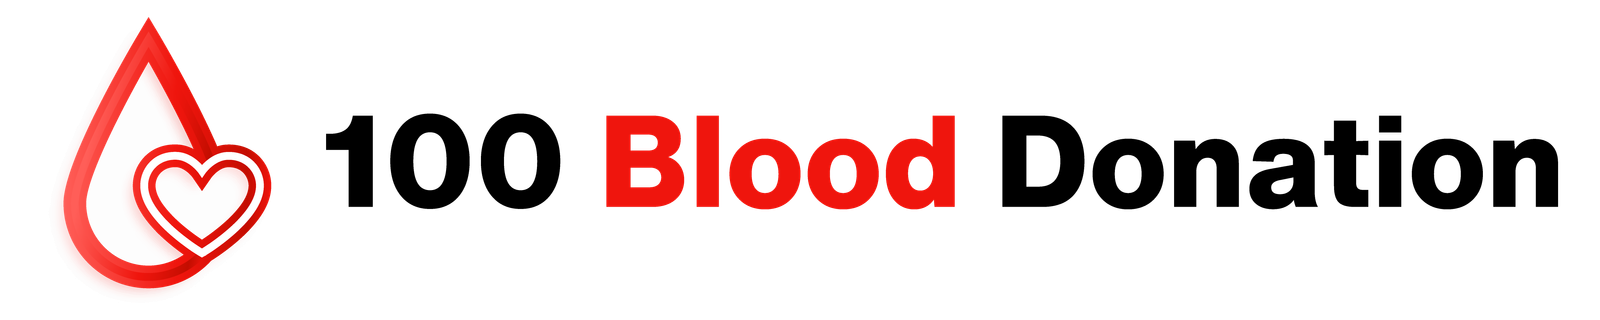 100 Blood Donation